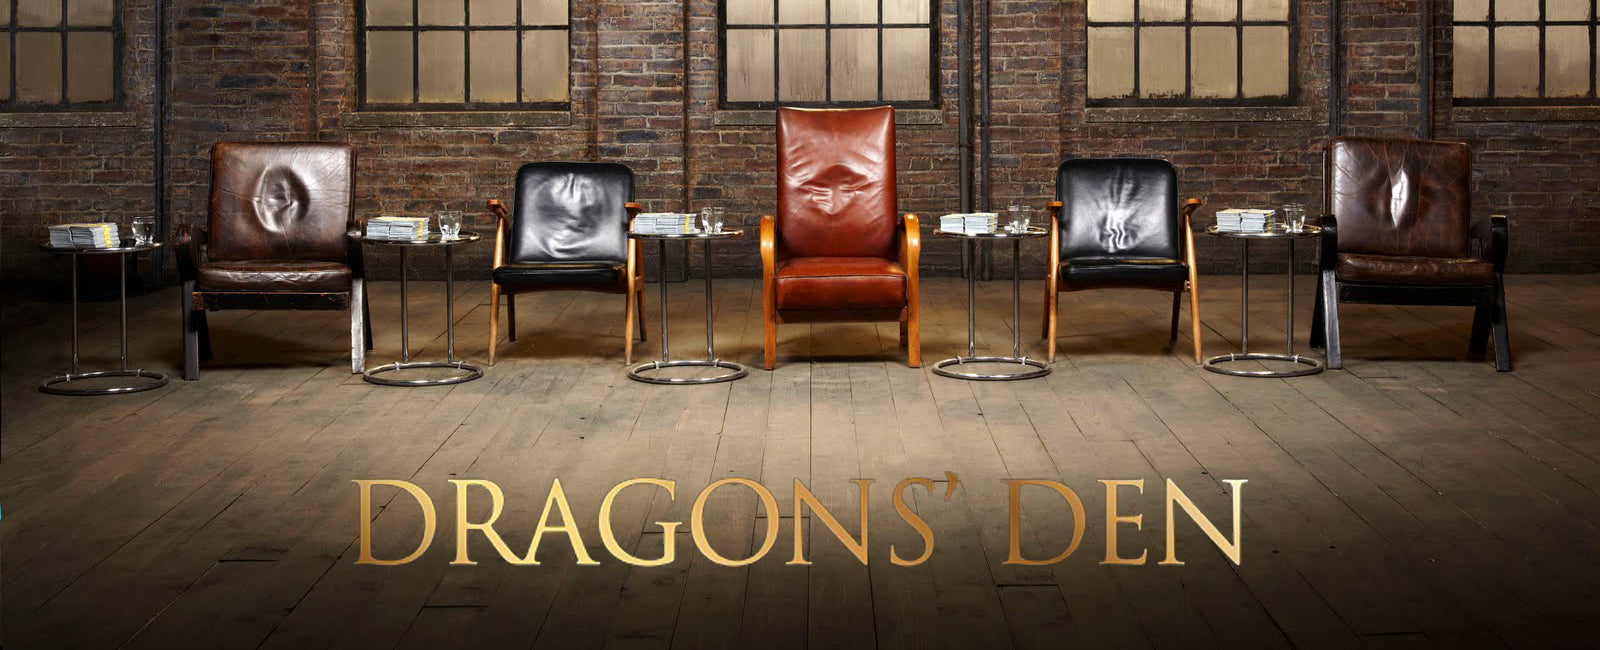 Dragon's den banner image empty seats